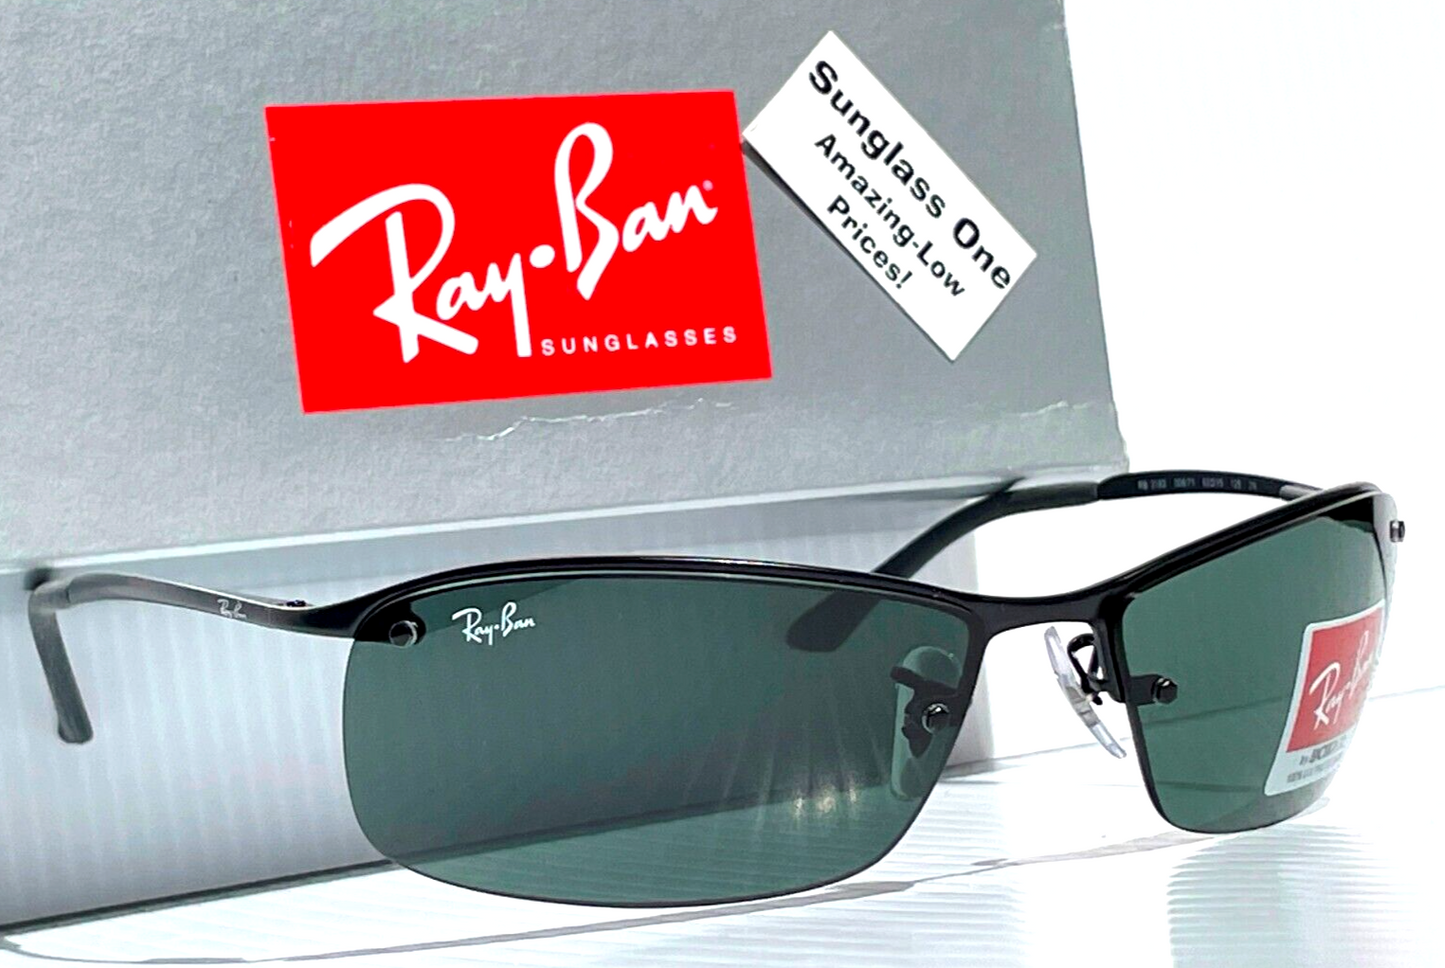 Ray Ban Polished Black Semi-Rimless Frames Dark Green Lens Sunglass RB 3183 006/71